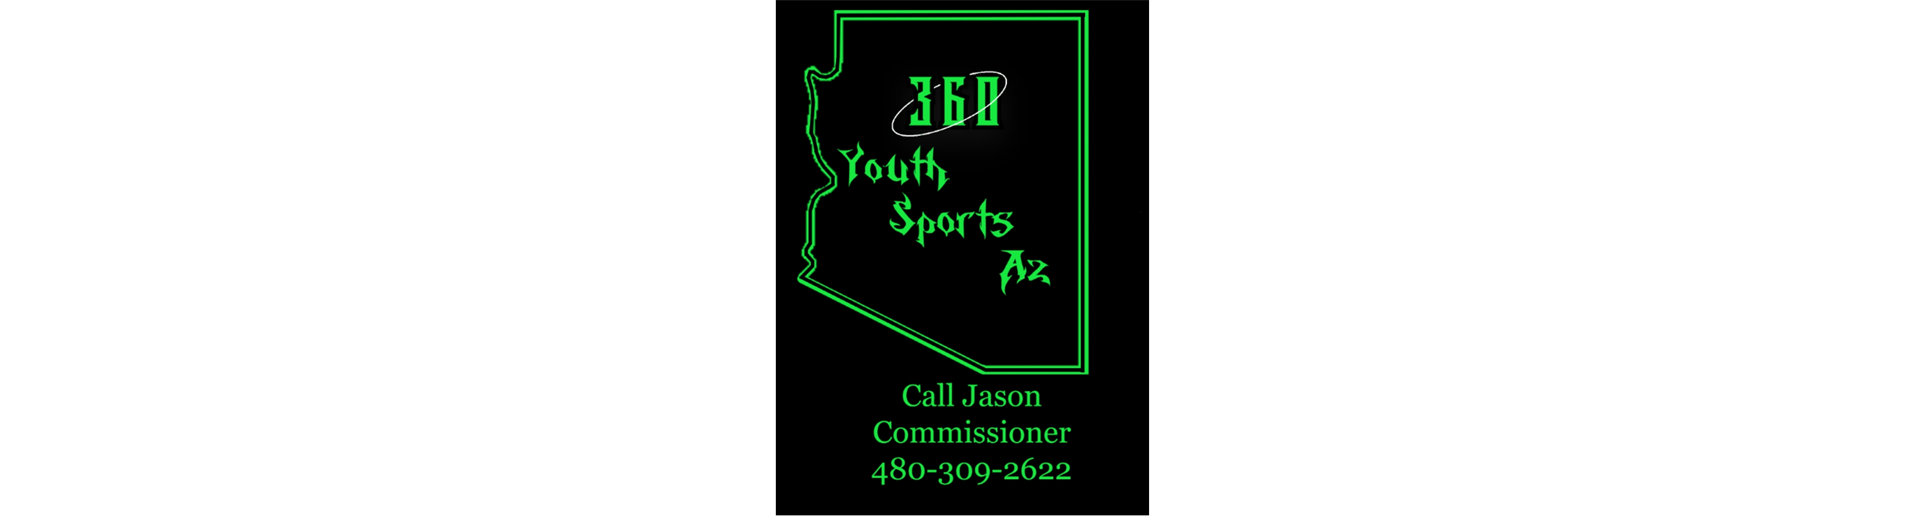 360 Youth Sports Az